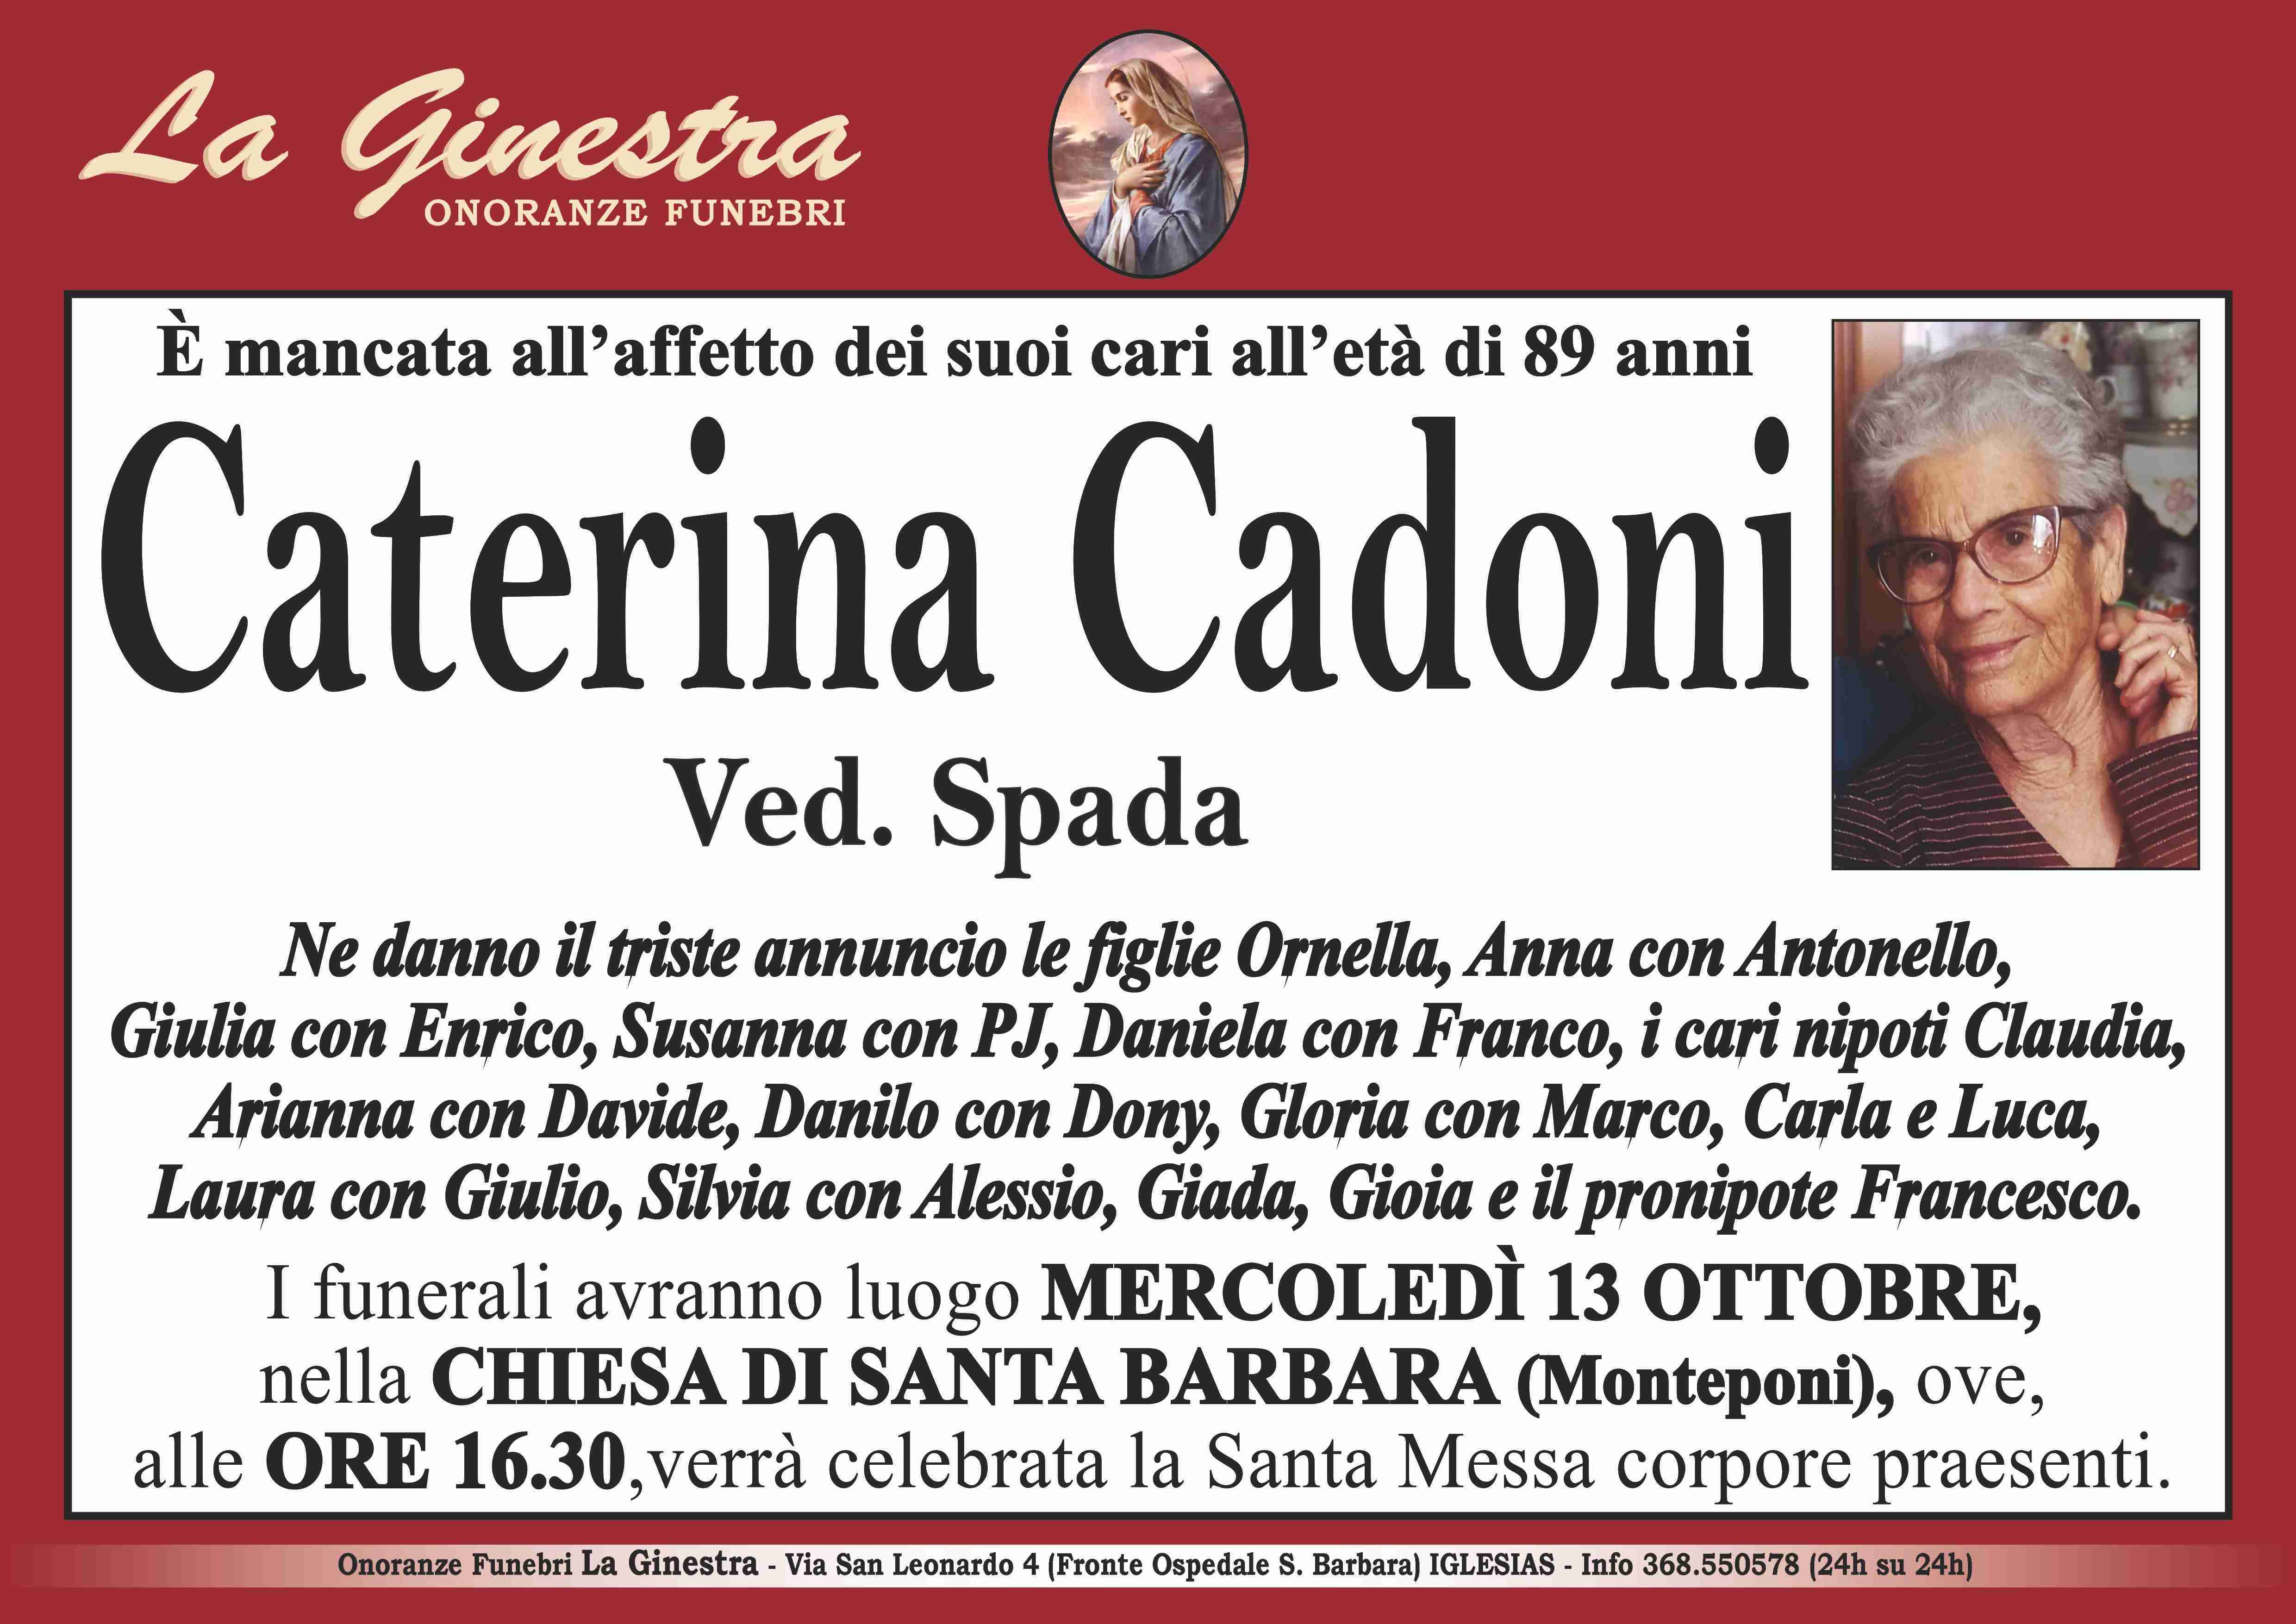 Caterina Cadoni